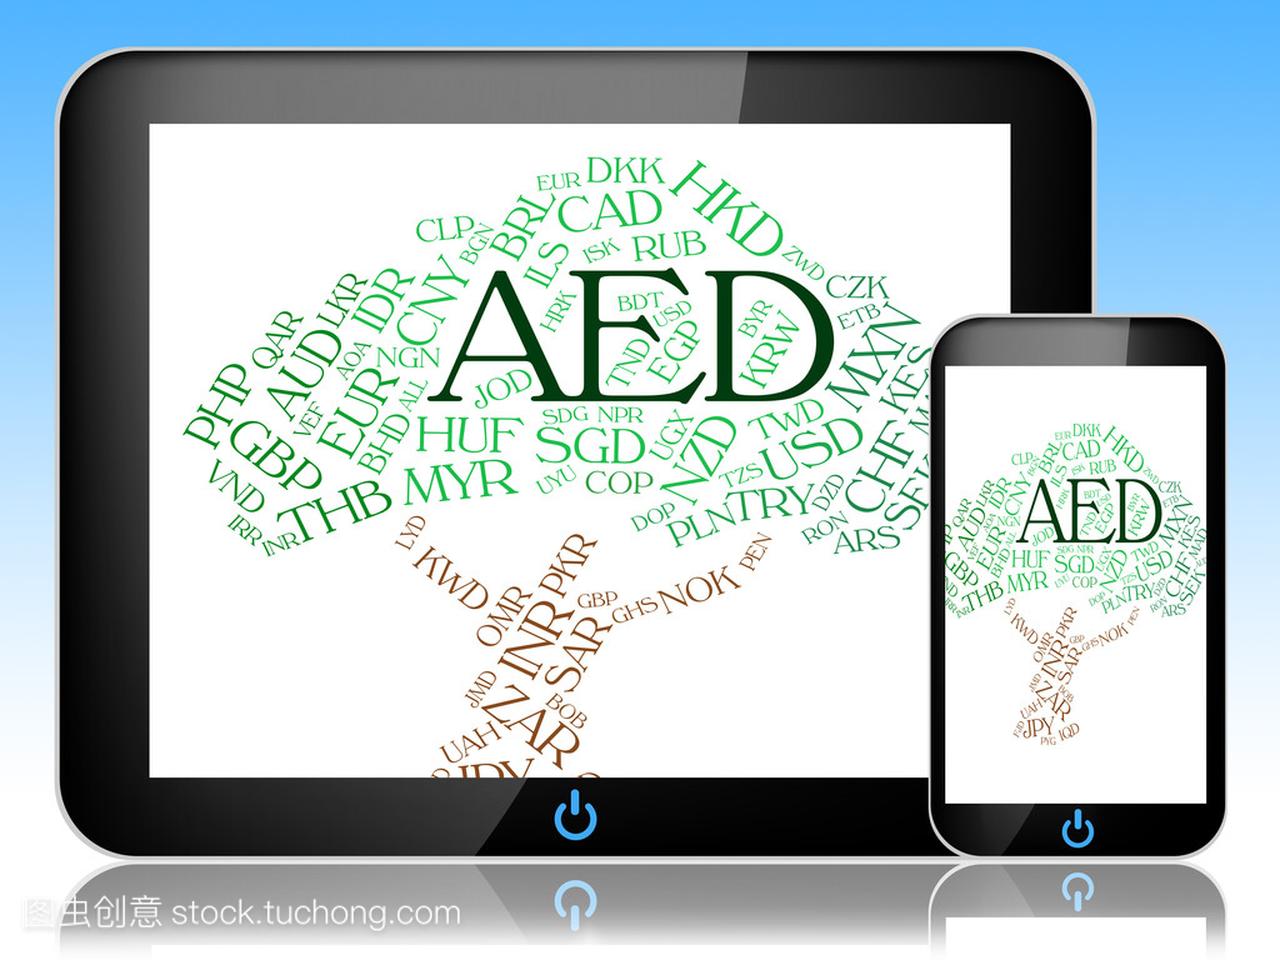 Aed 货币表明阿拉伯联合酋长国和货币